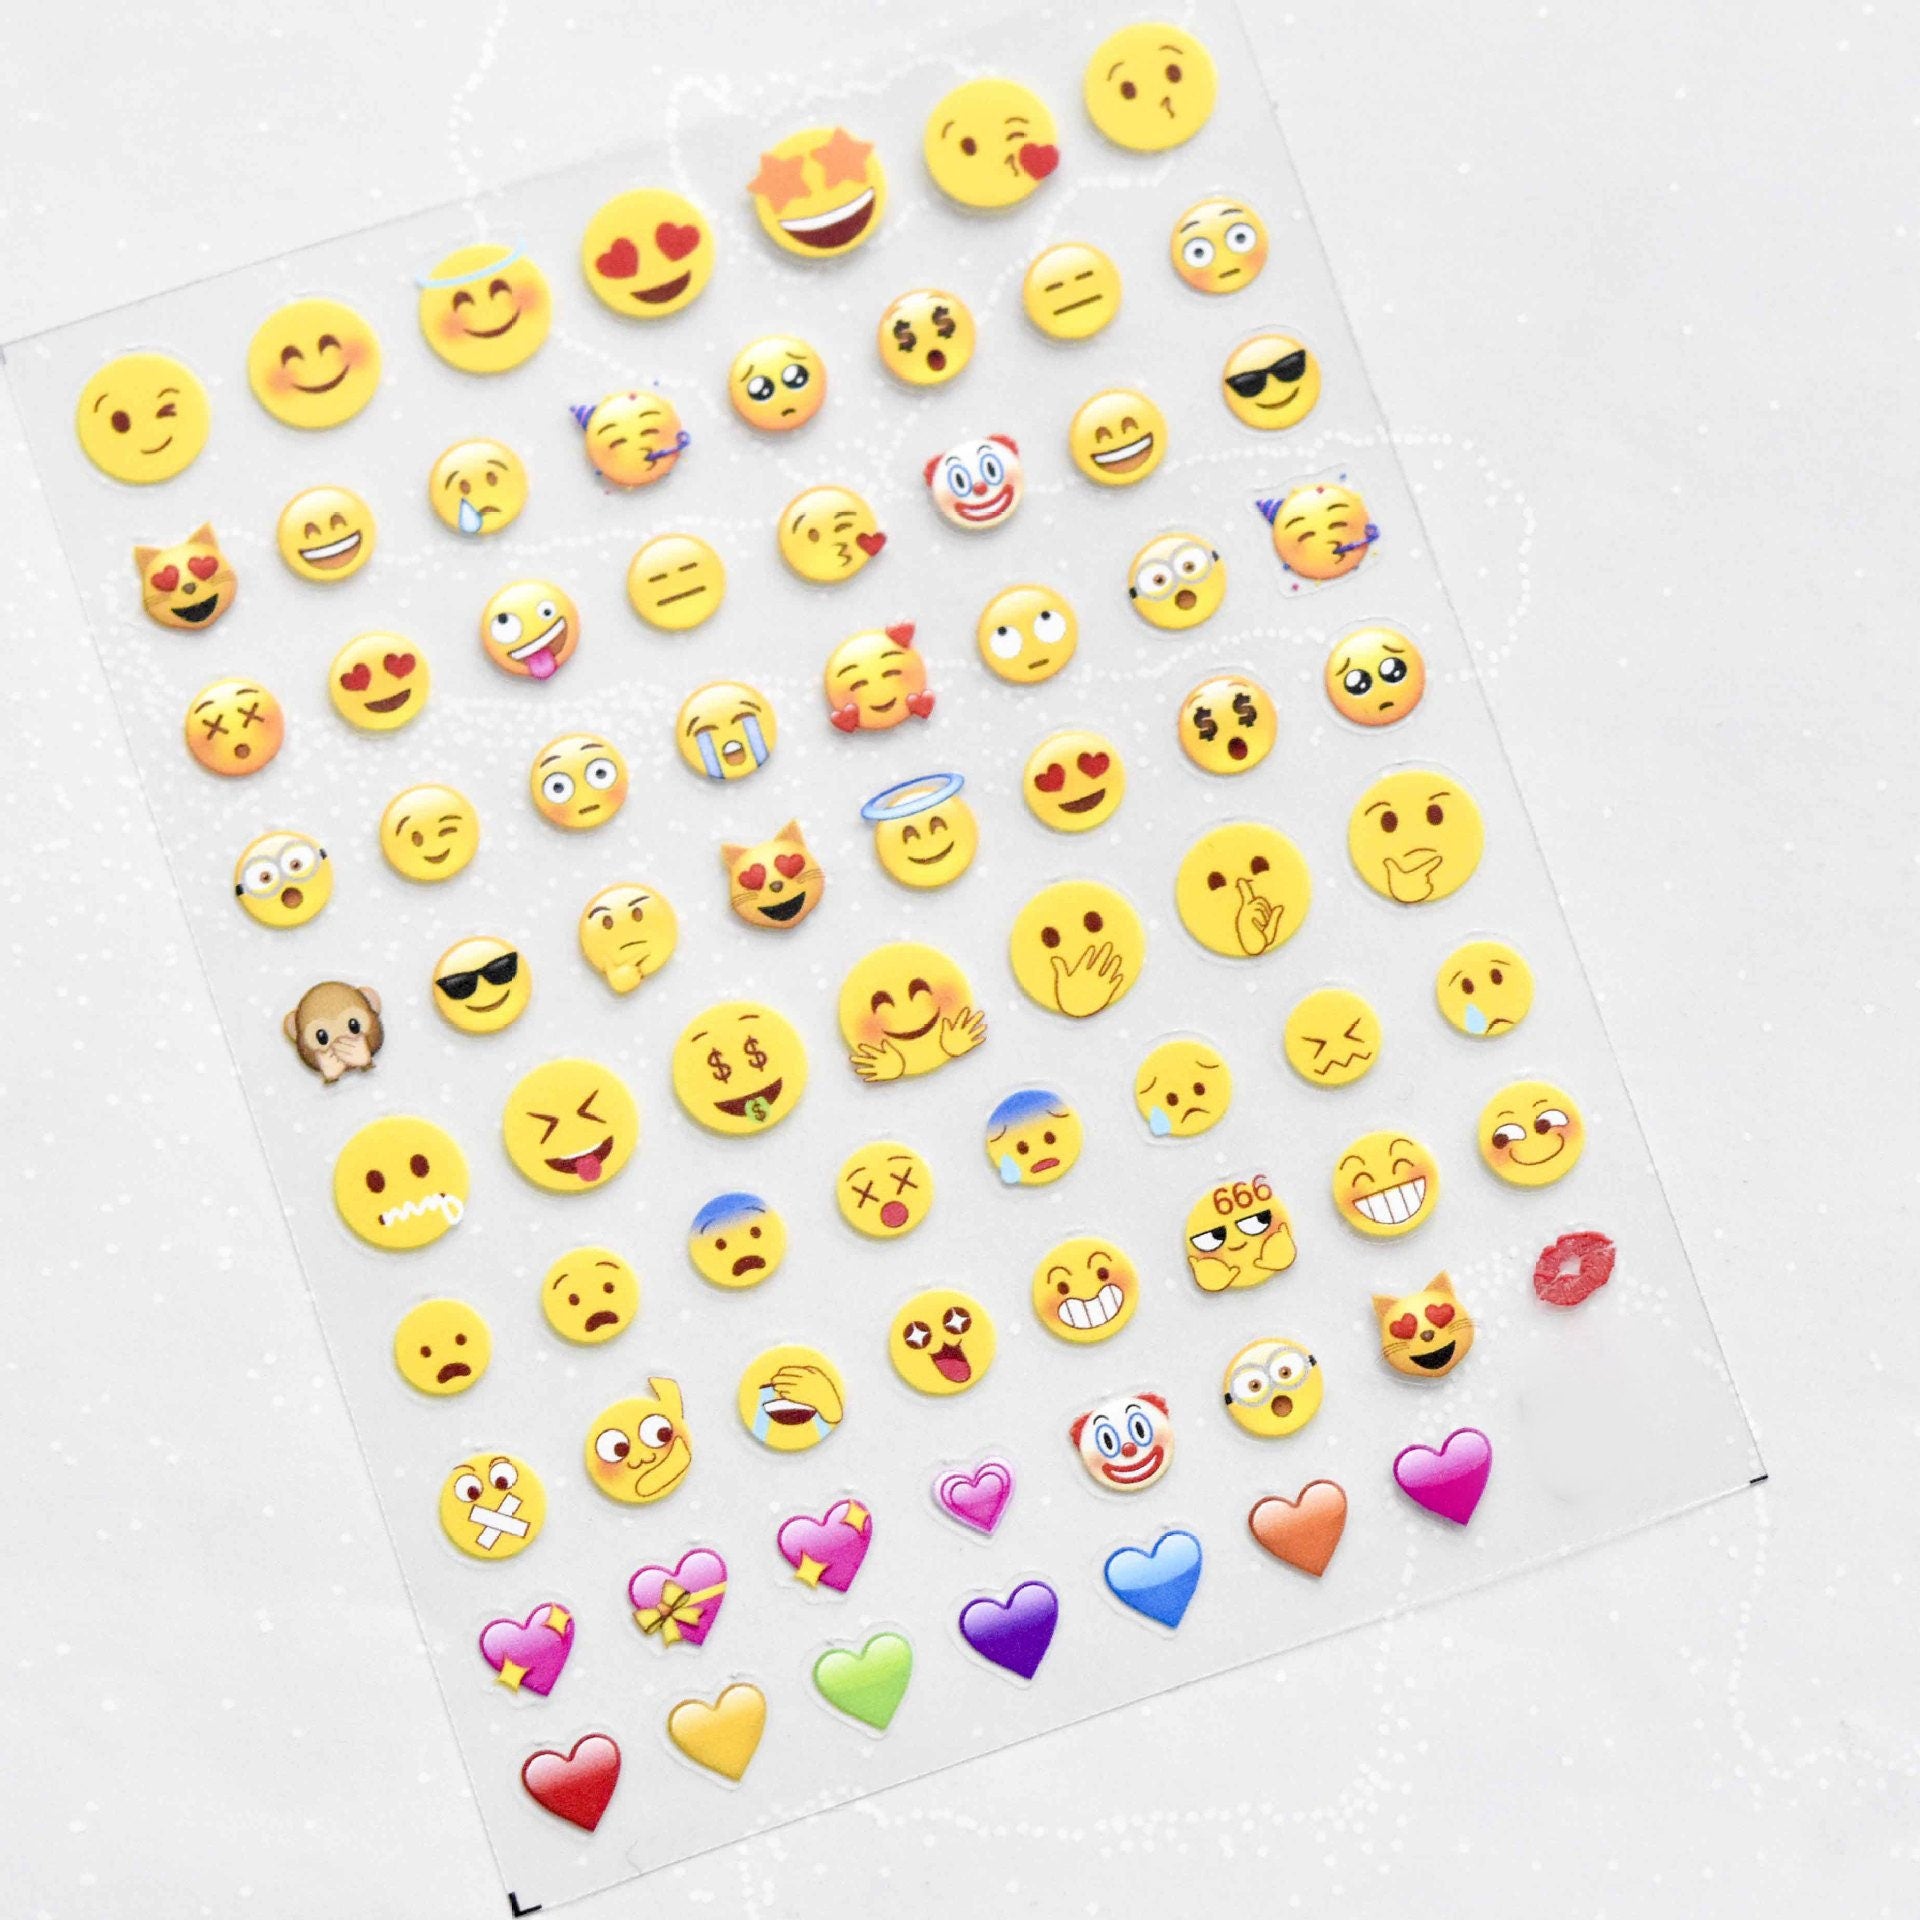 Emoji Nail Art Sticker/ Smiley Happy Face DIY Tips Stickers/Ultra thin Peel Off Emoji Face Nail Decals/ Social Media Text expression meme